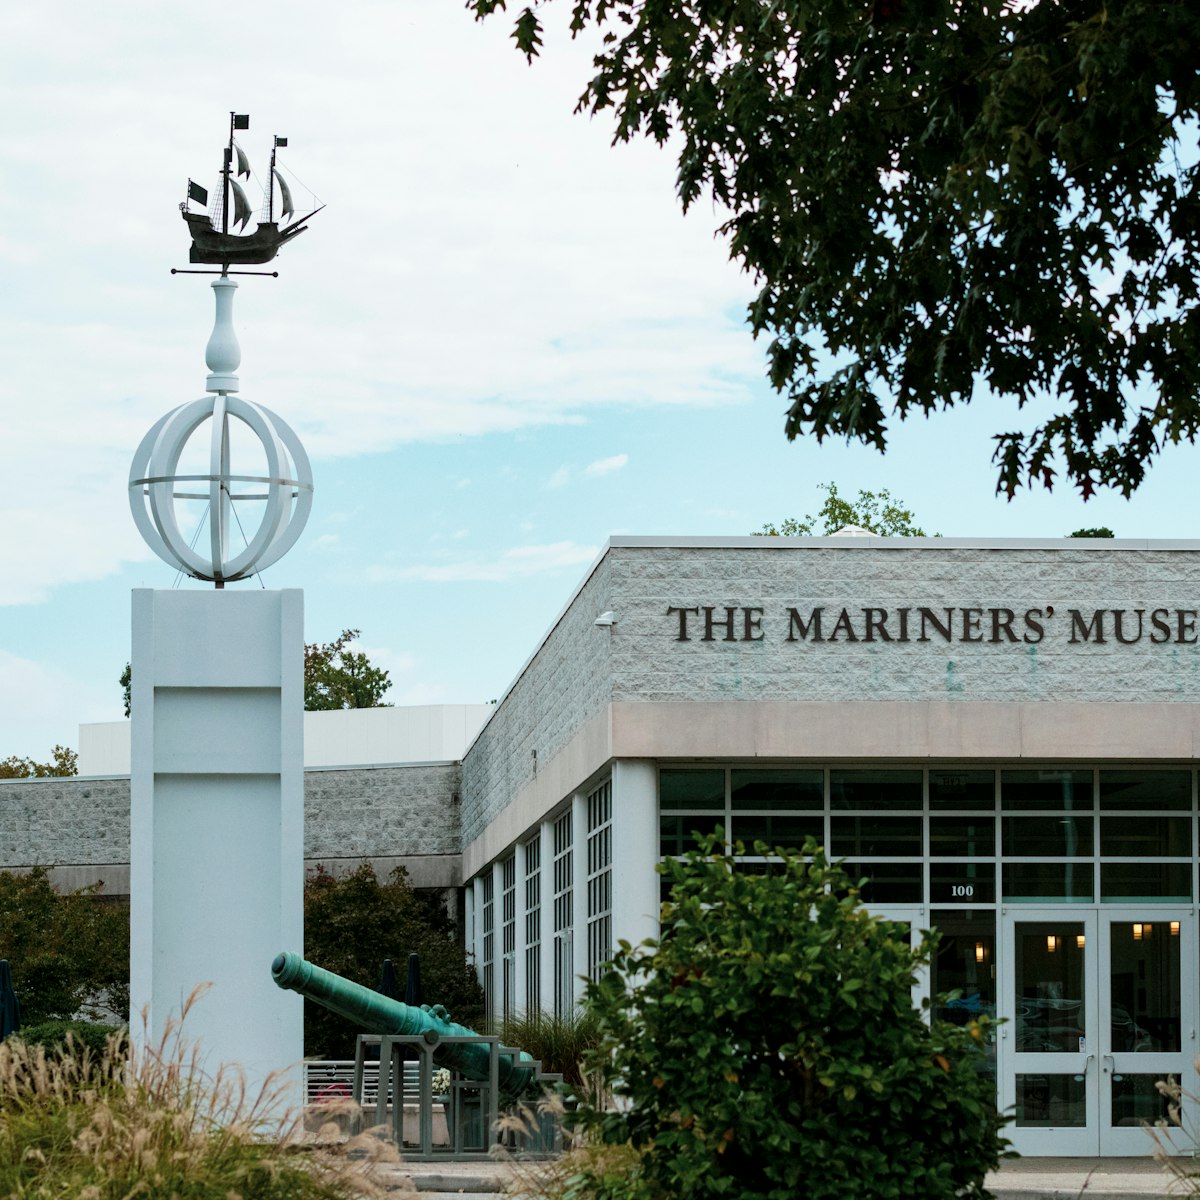 The Mariners' Museum in Newport News, Virginia.